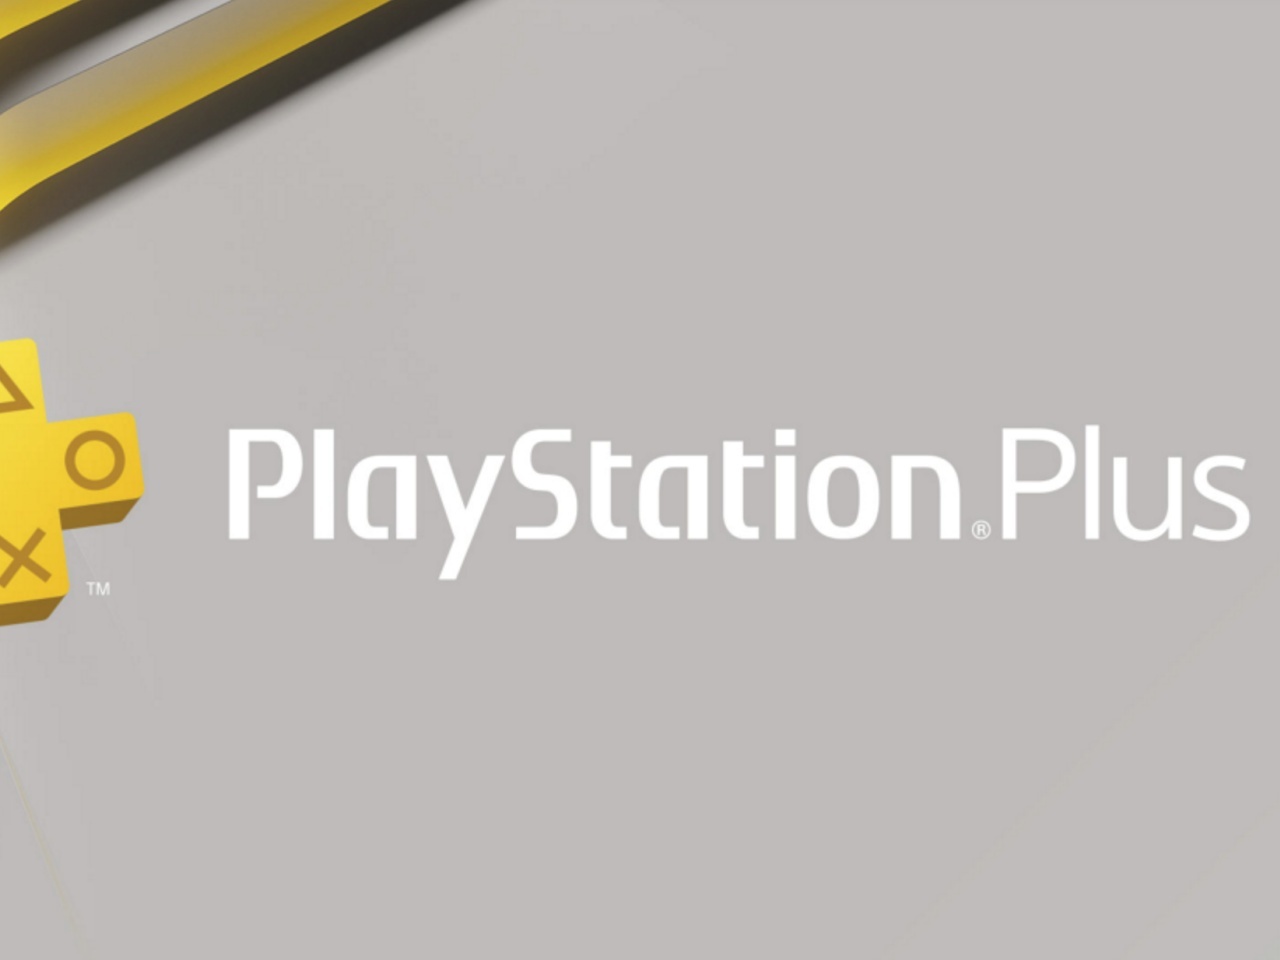 PlayStation Plusのロゴ